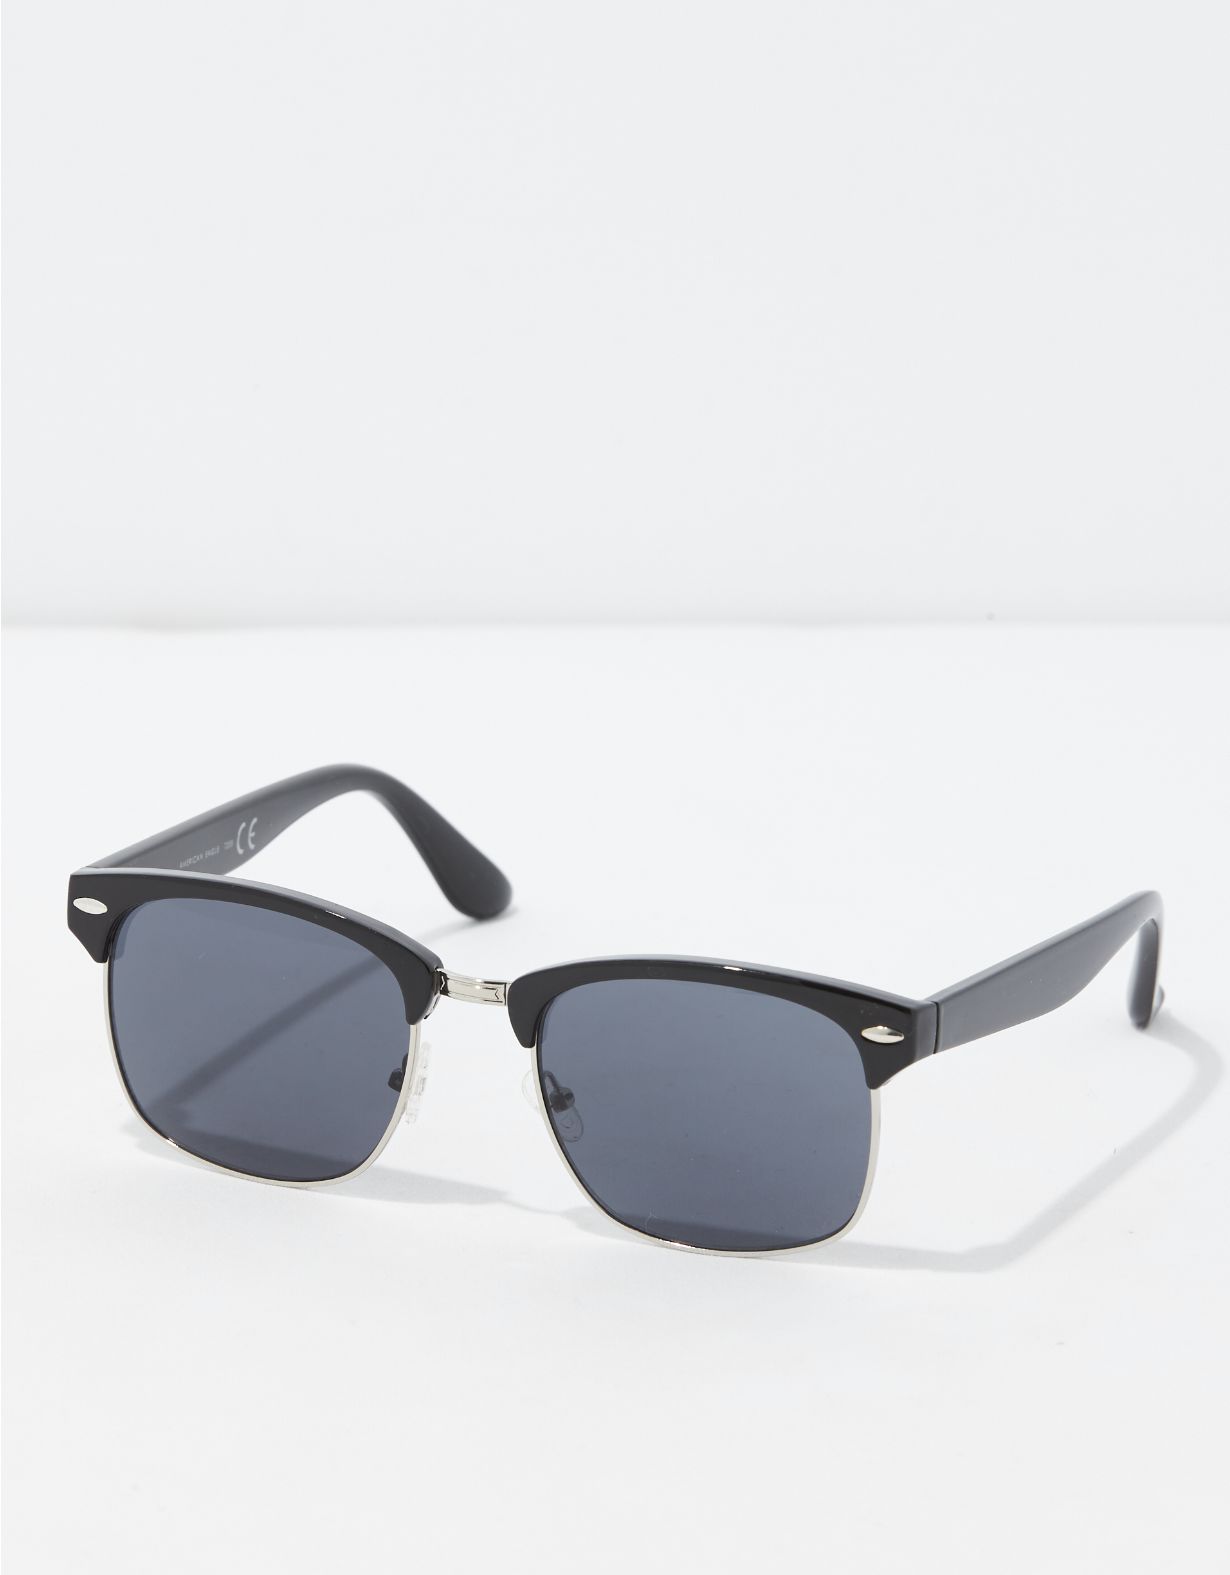 AEO Black Sunglasses